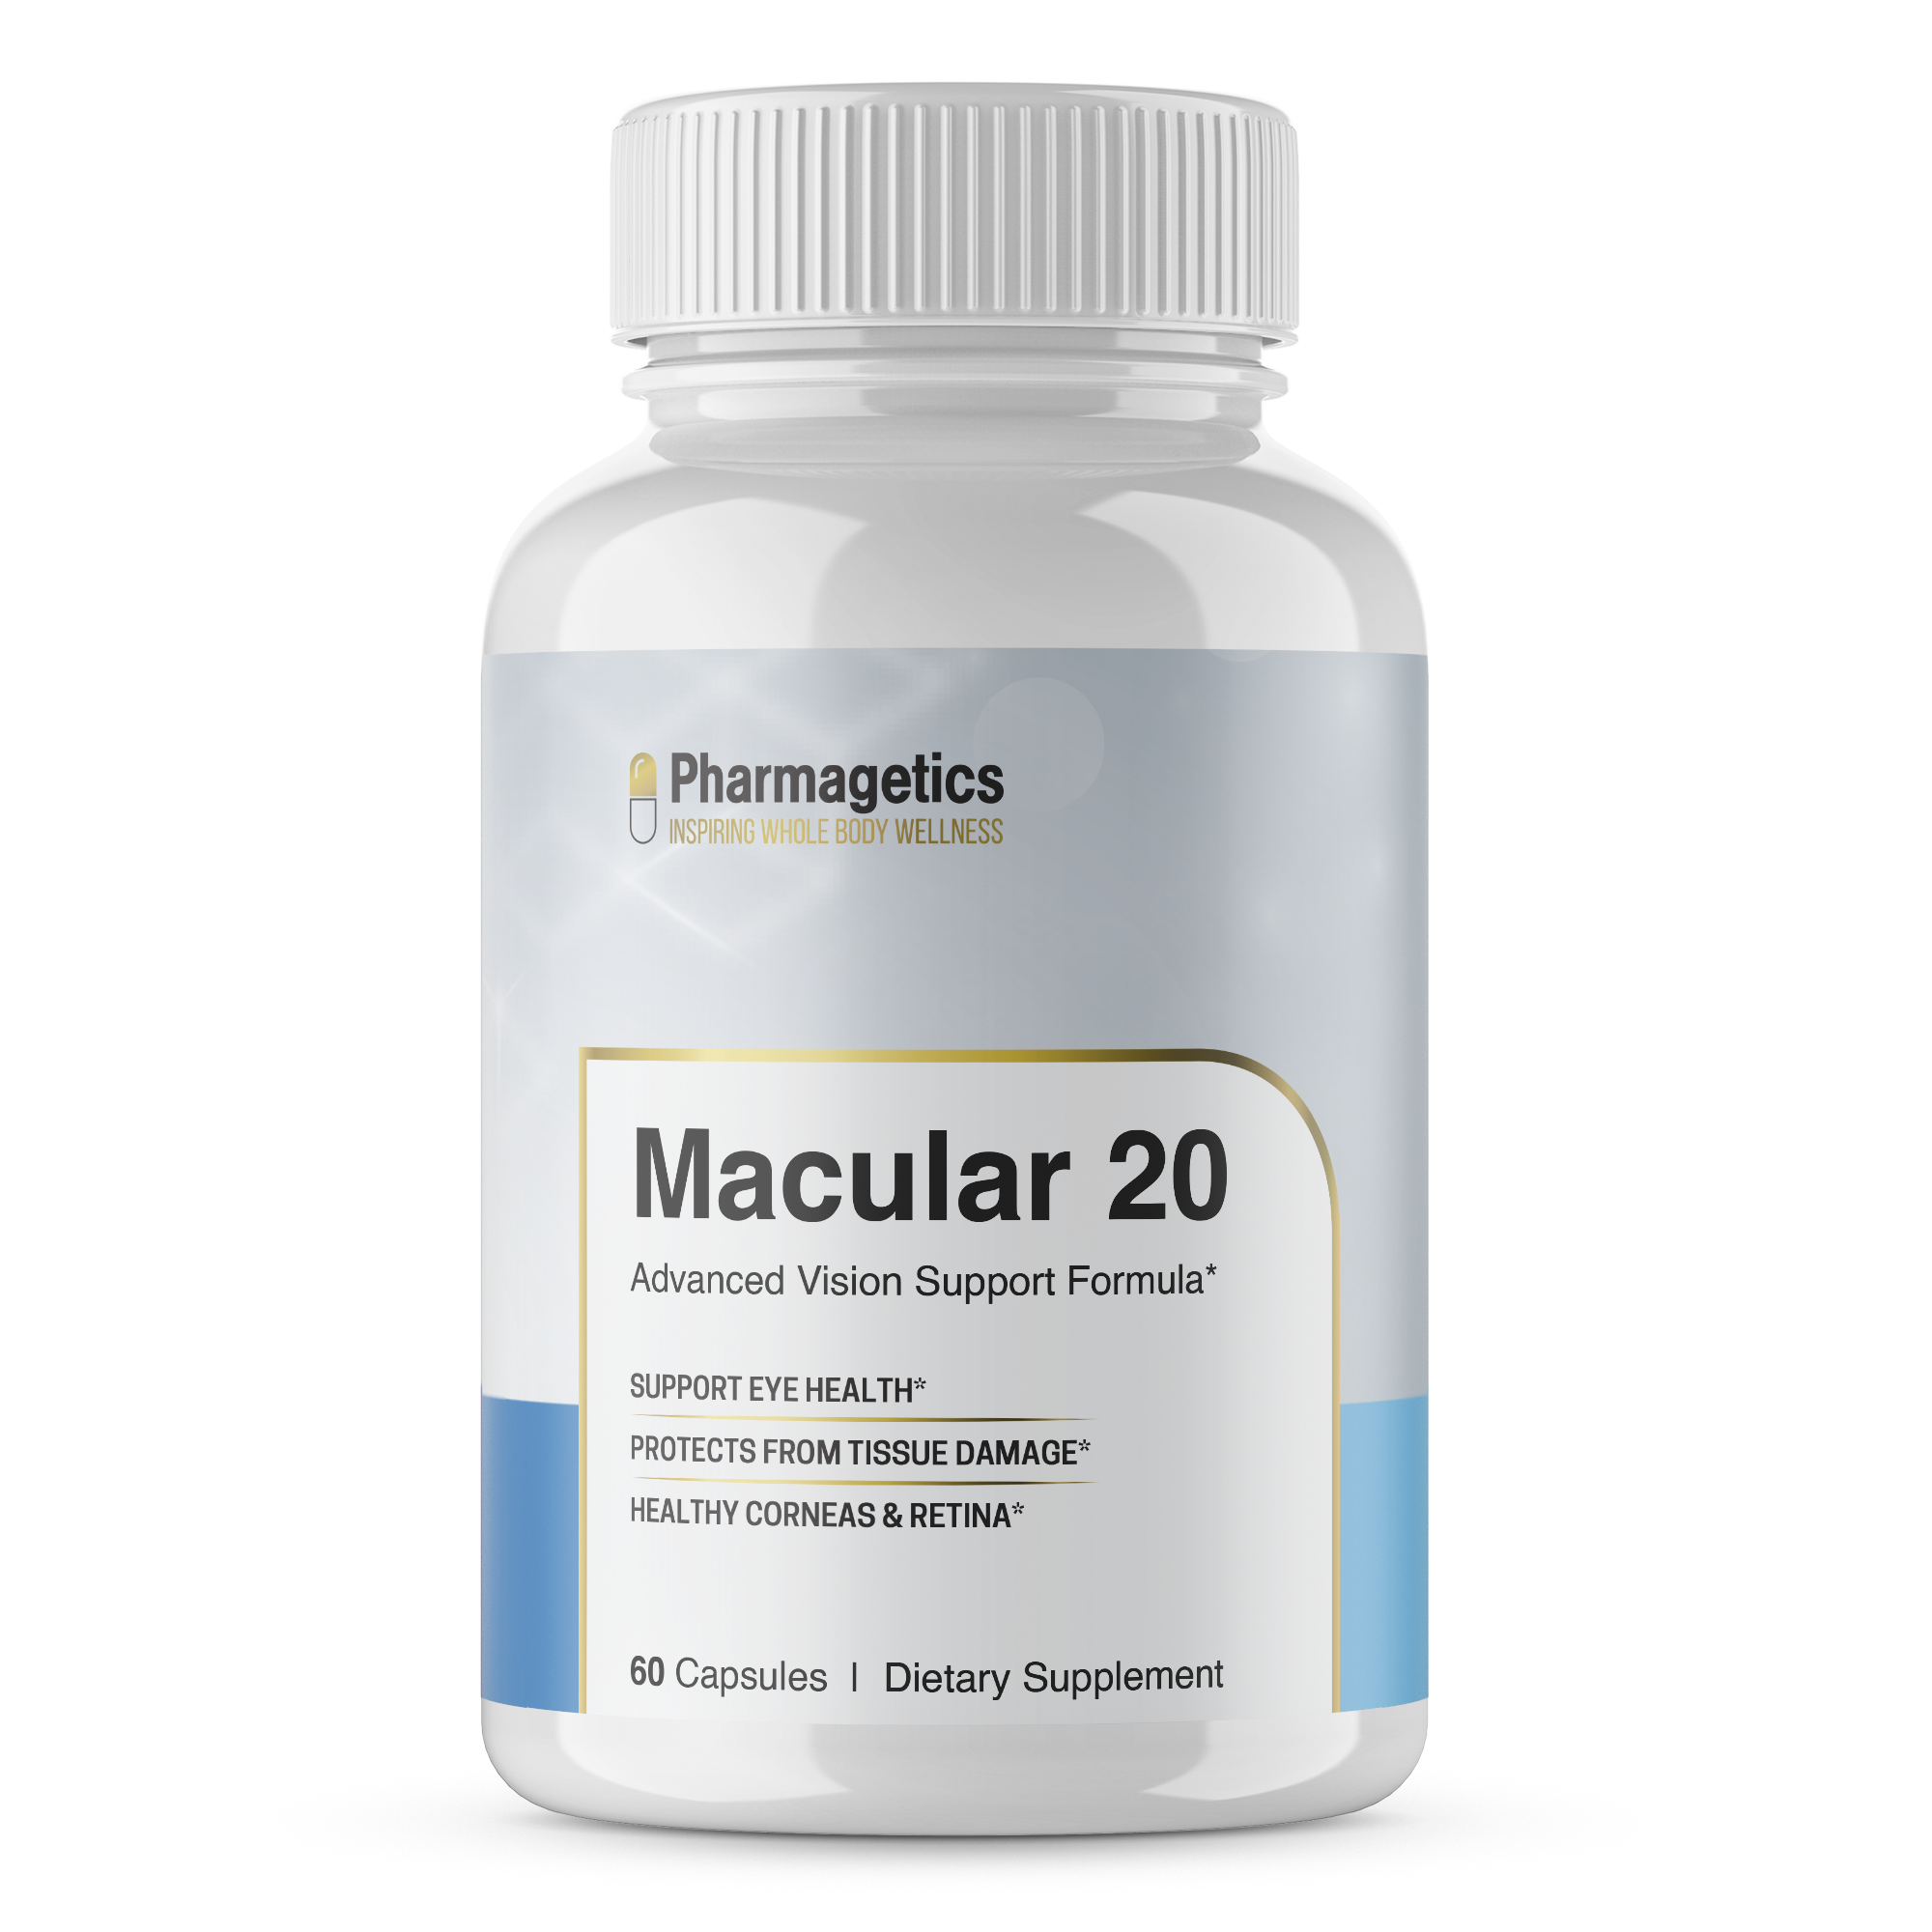 Macular 20 Advanced Eye Health Vision Support